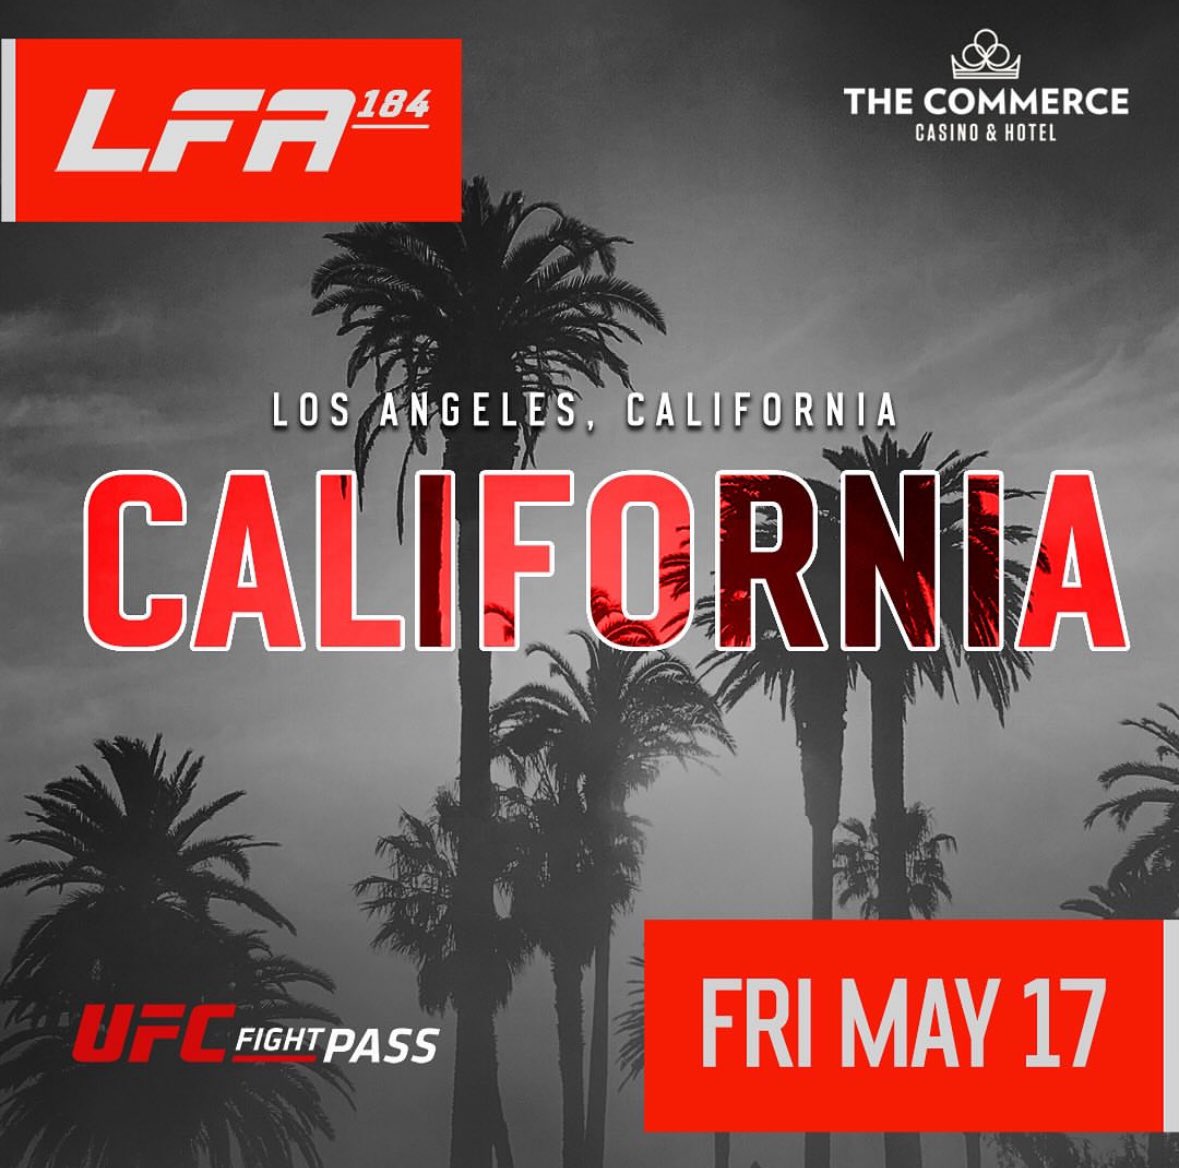 The @LFAfighting has announced their schedule for May

LFA 183 May 3 Rio de Janeiro Brazil 🇧🇷 
LFA 184 May 17 Los Angeles California 🇺🇸
#LFA183 #LFA184